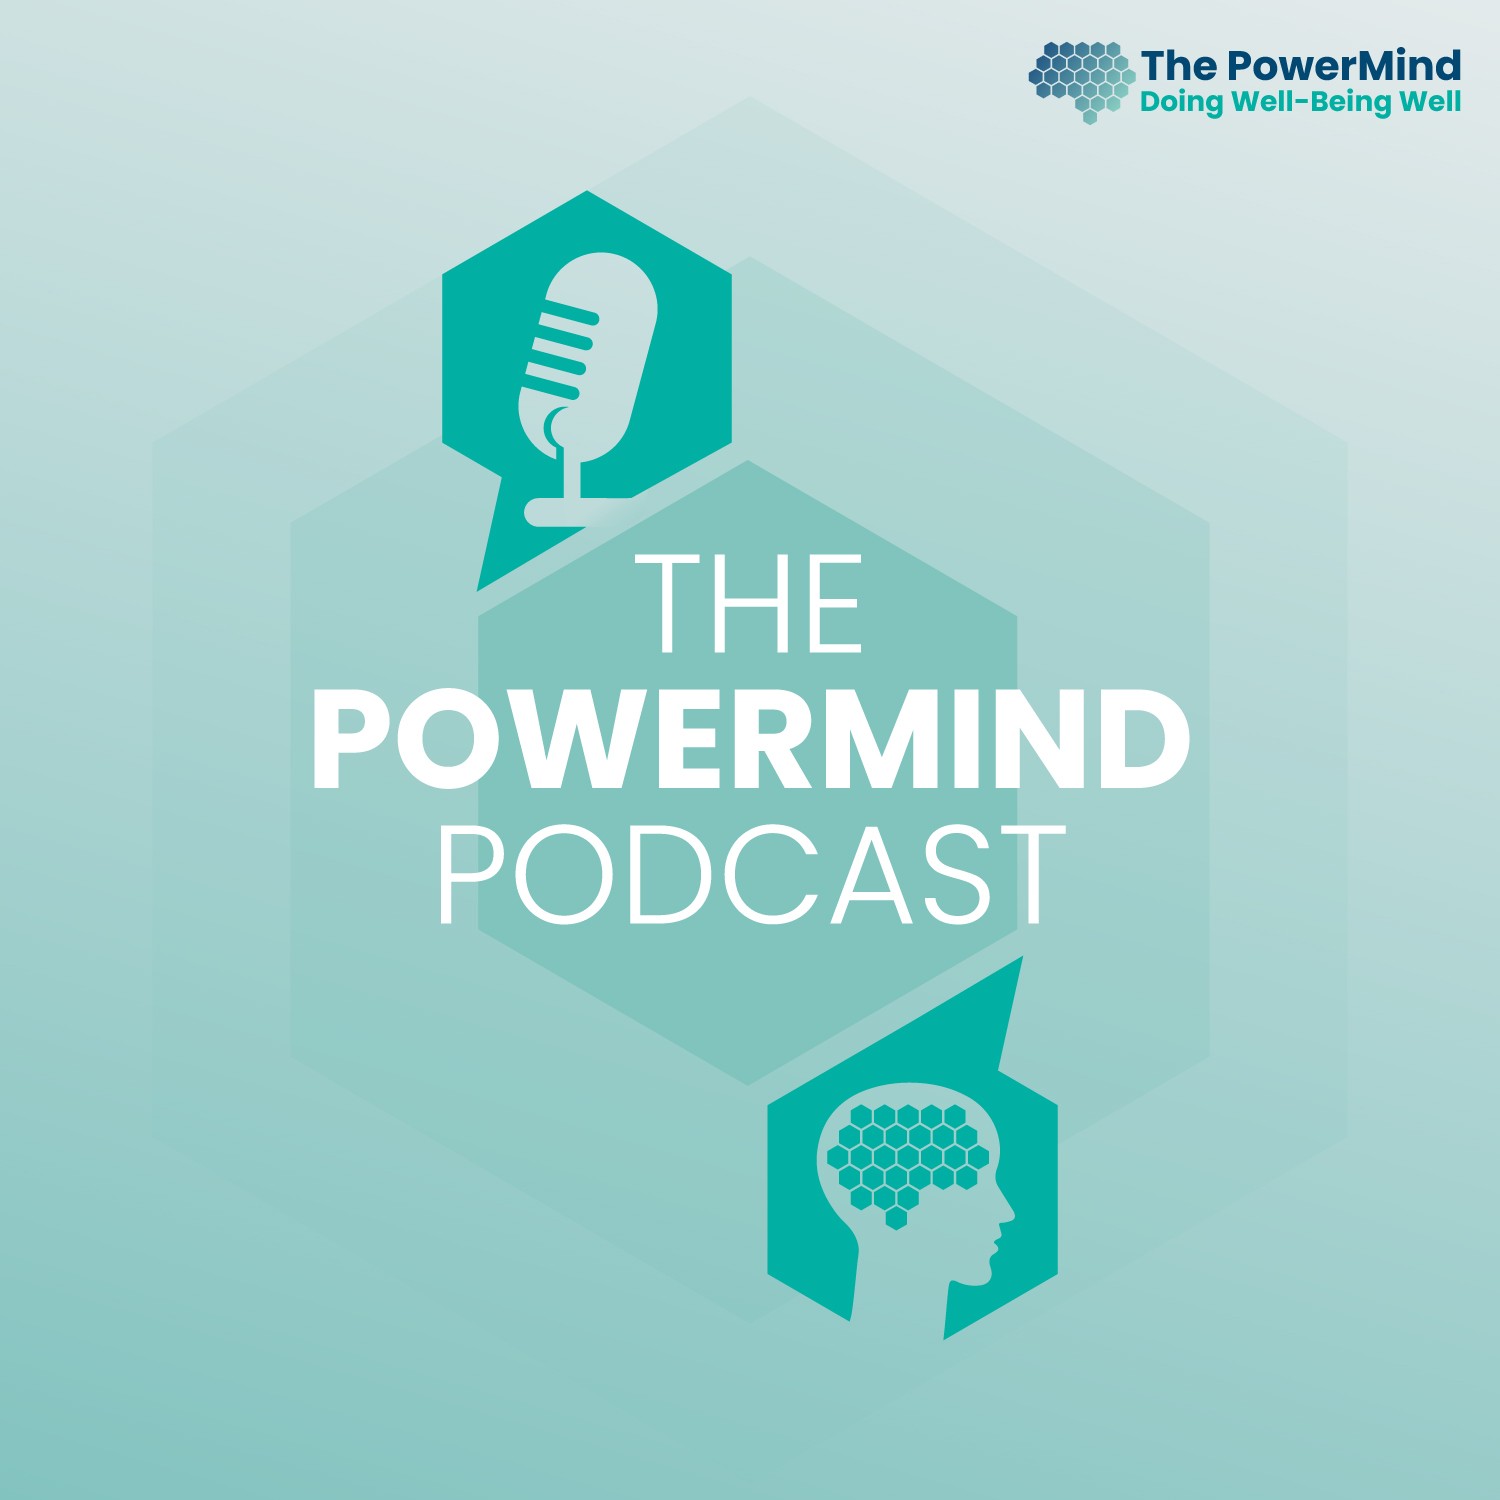 The PowerMind Podcast